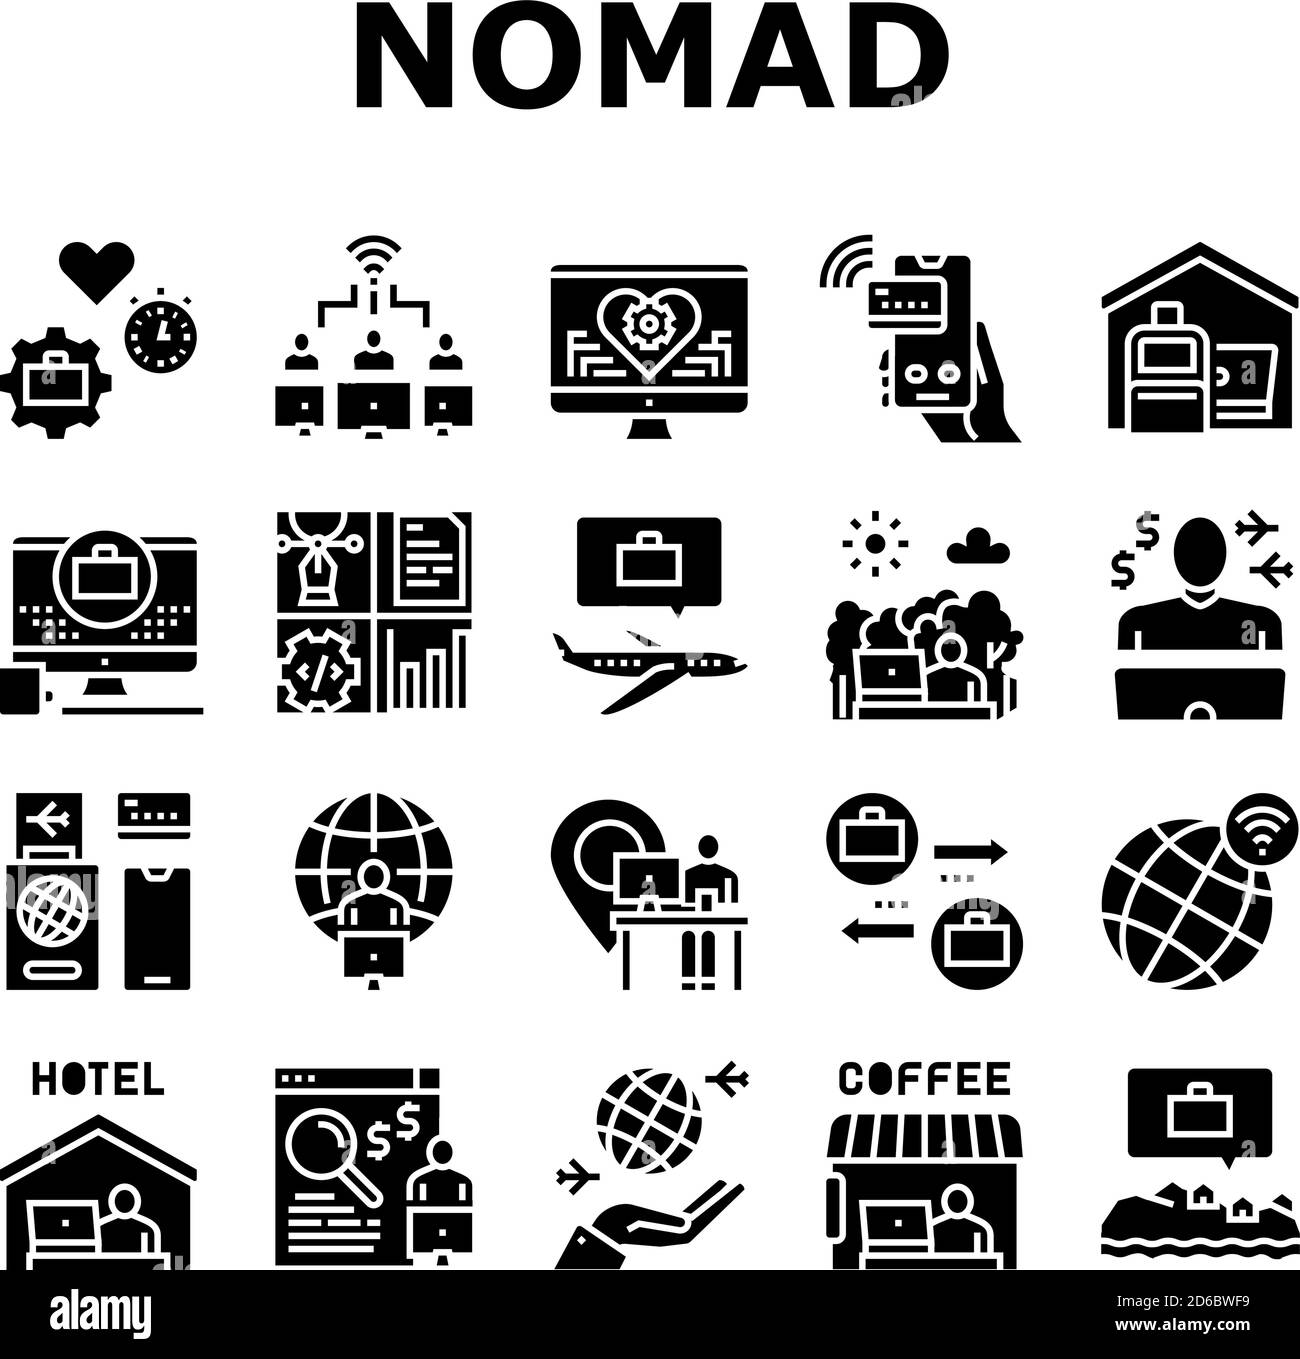 Digital Nomad Worker Collection Icons Set Vector Illustration de Vecteur